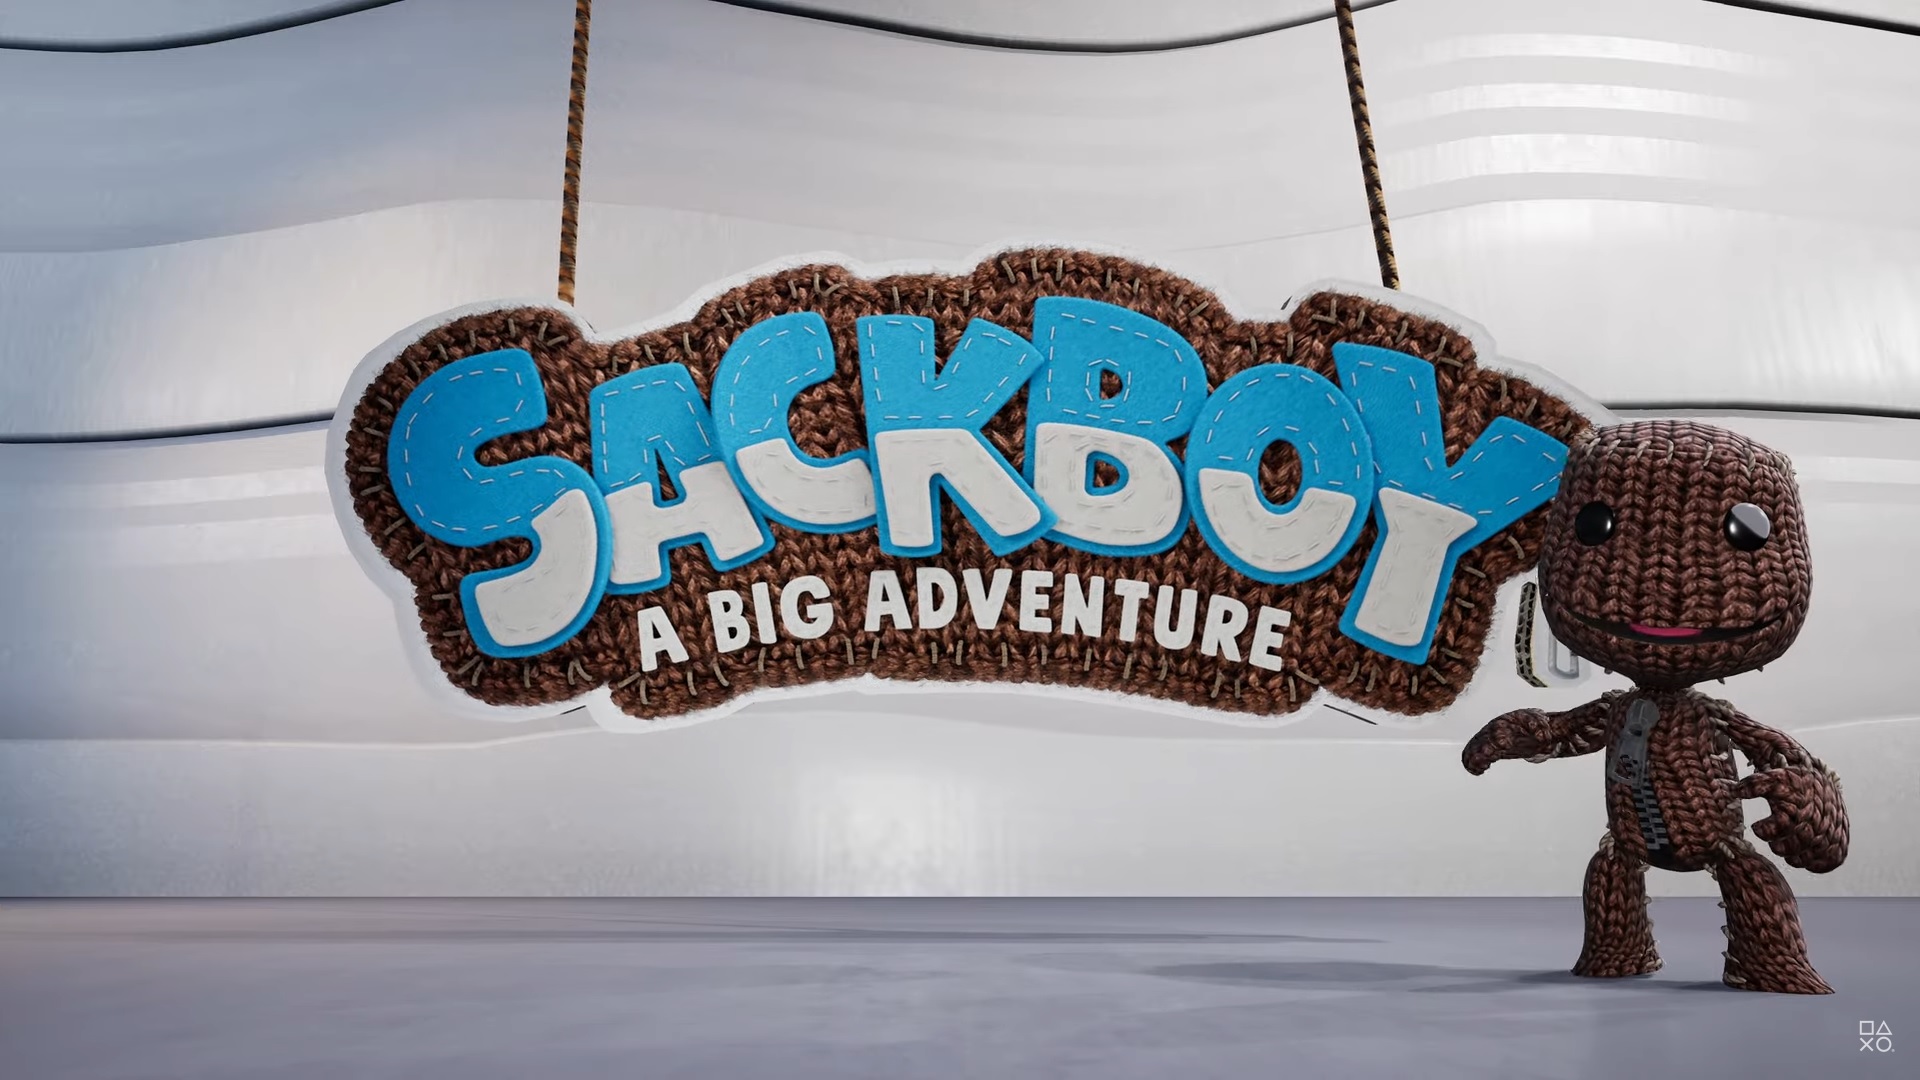 download sackboy a new adventure